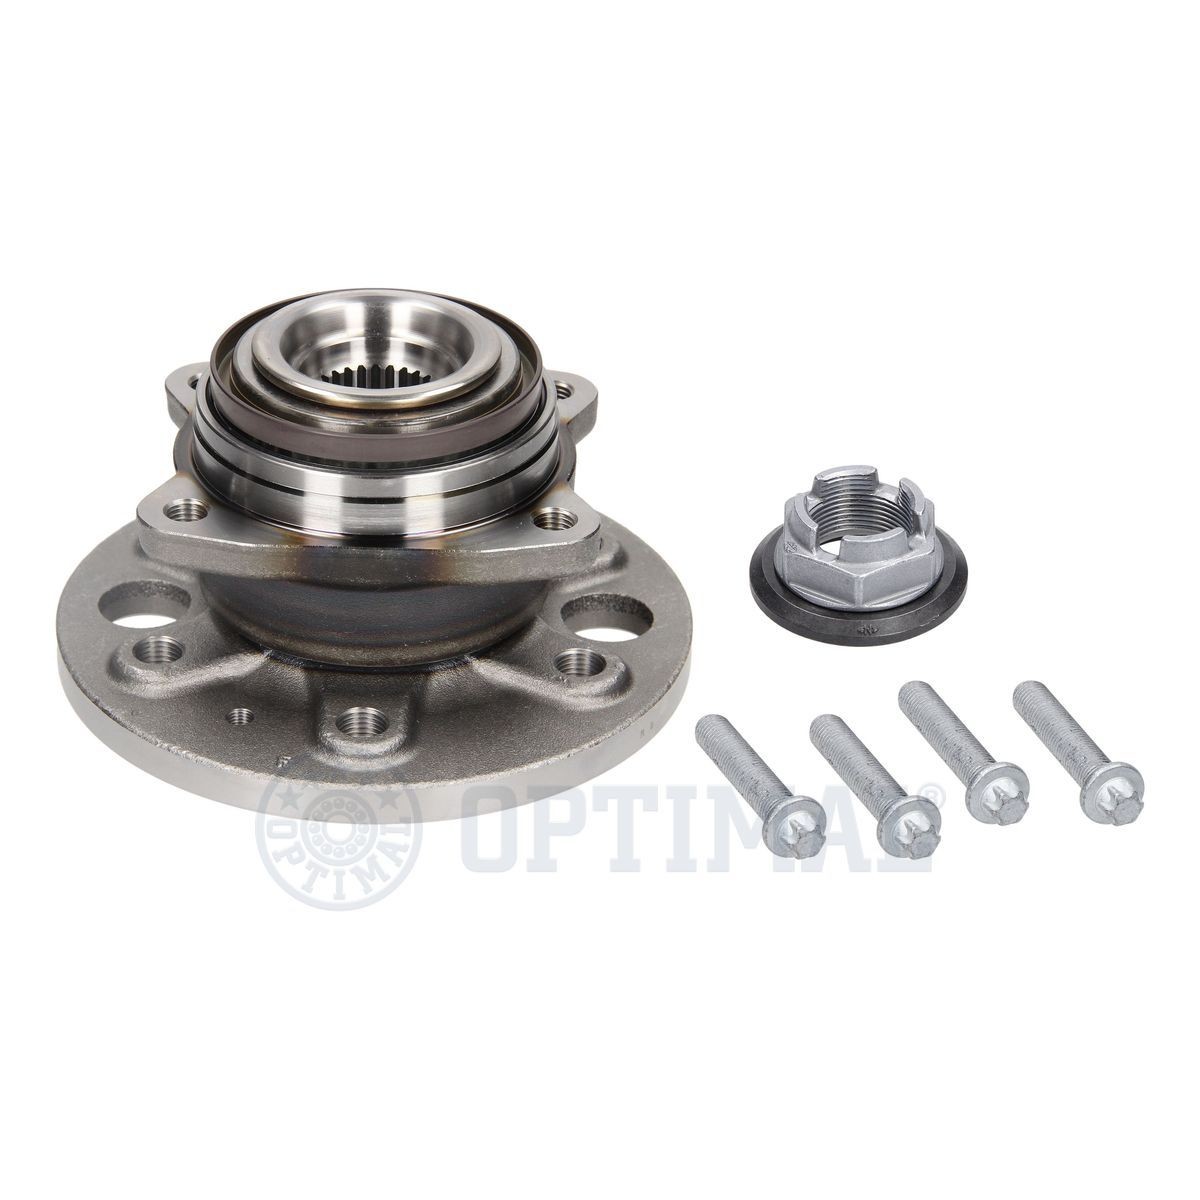 OPTIMAL 402912 Wheel bearing kit with integrated magnetic sensor ring, 175, 97,9 mm, Tapered Roller Bearing